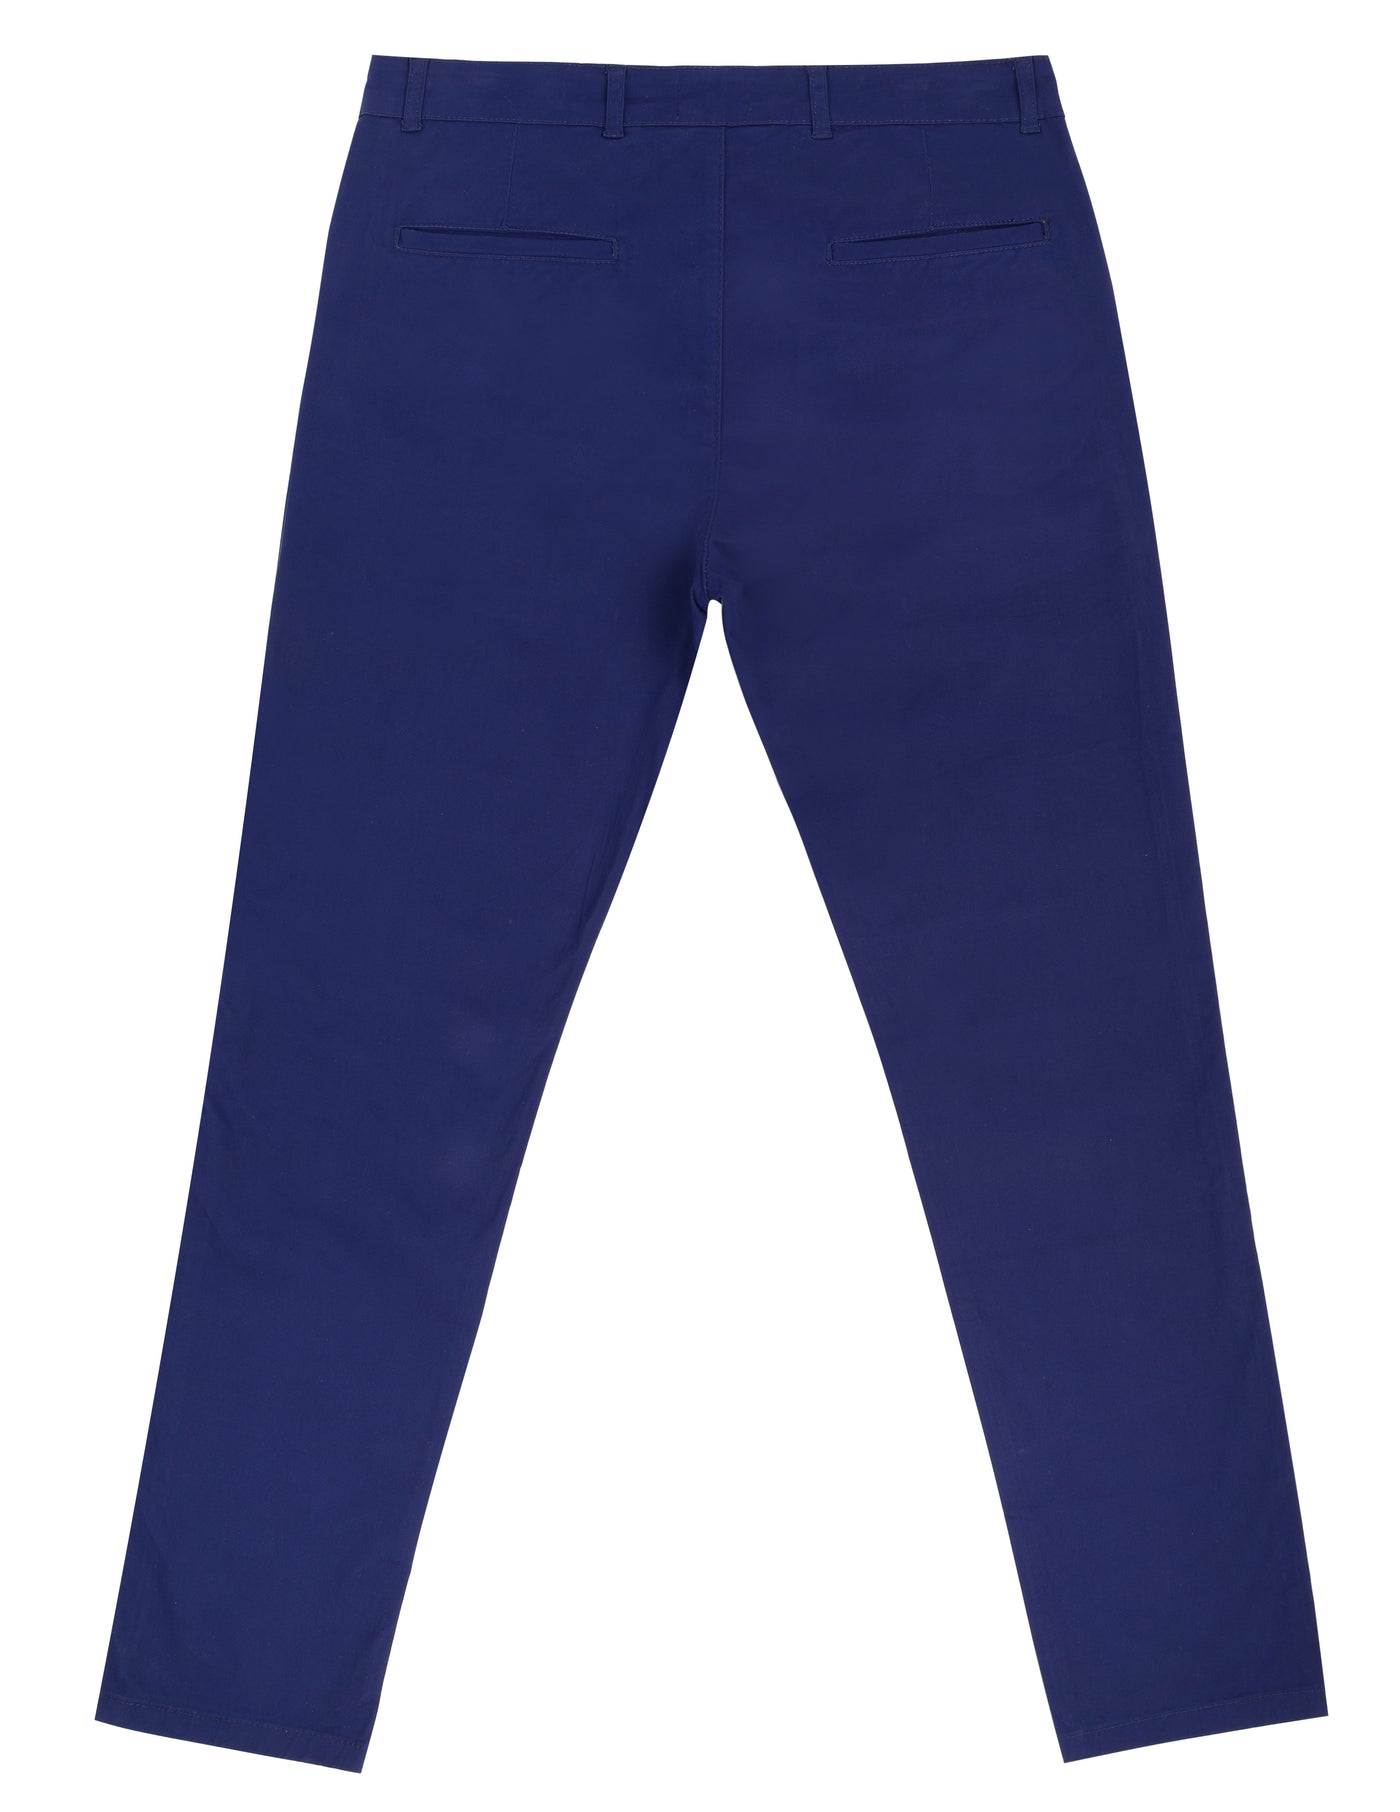 Chino Twill Cotton & Elastic Midnight Blue Gabardine Pant